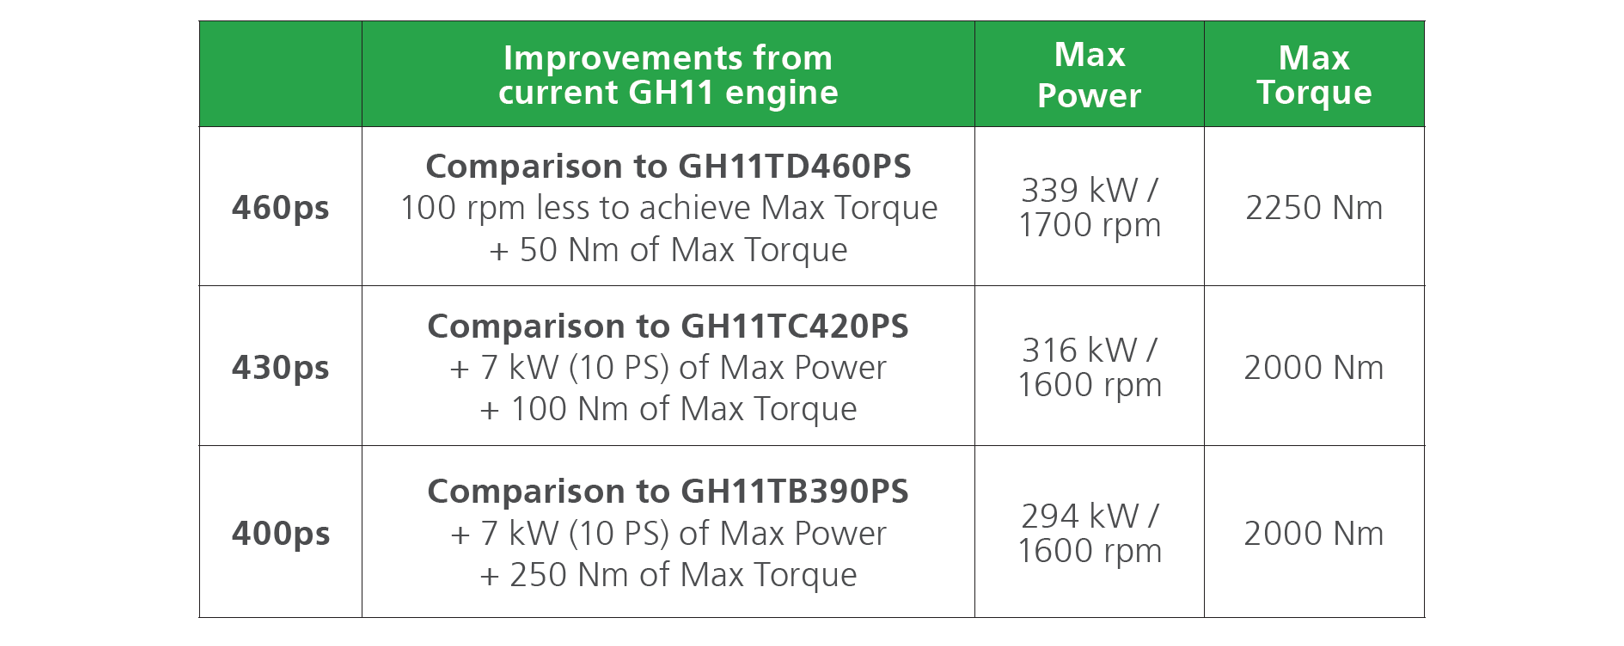 Torque power improvements